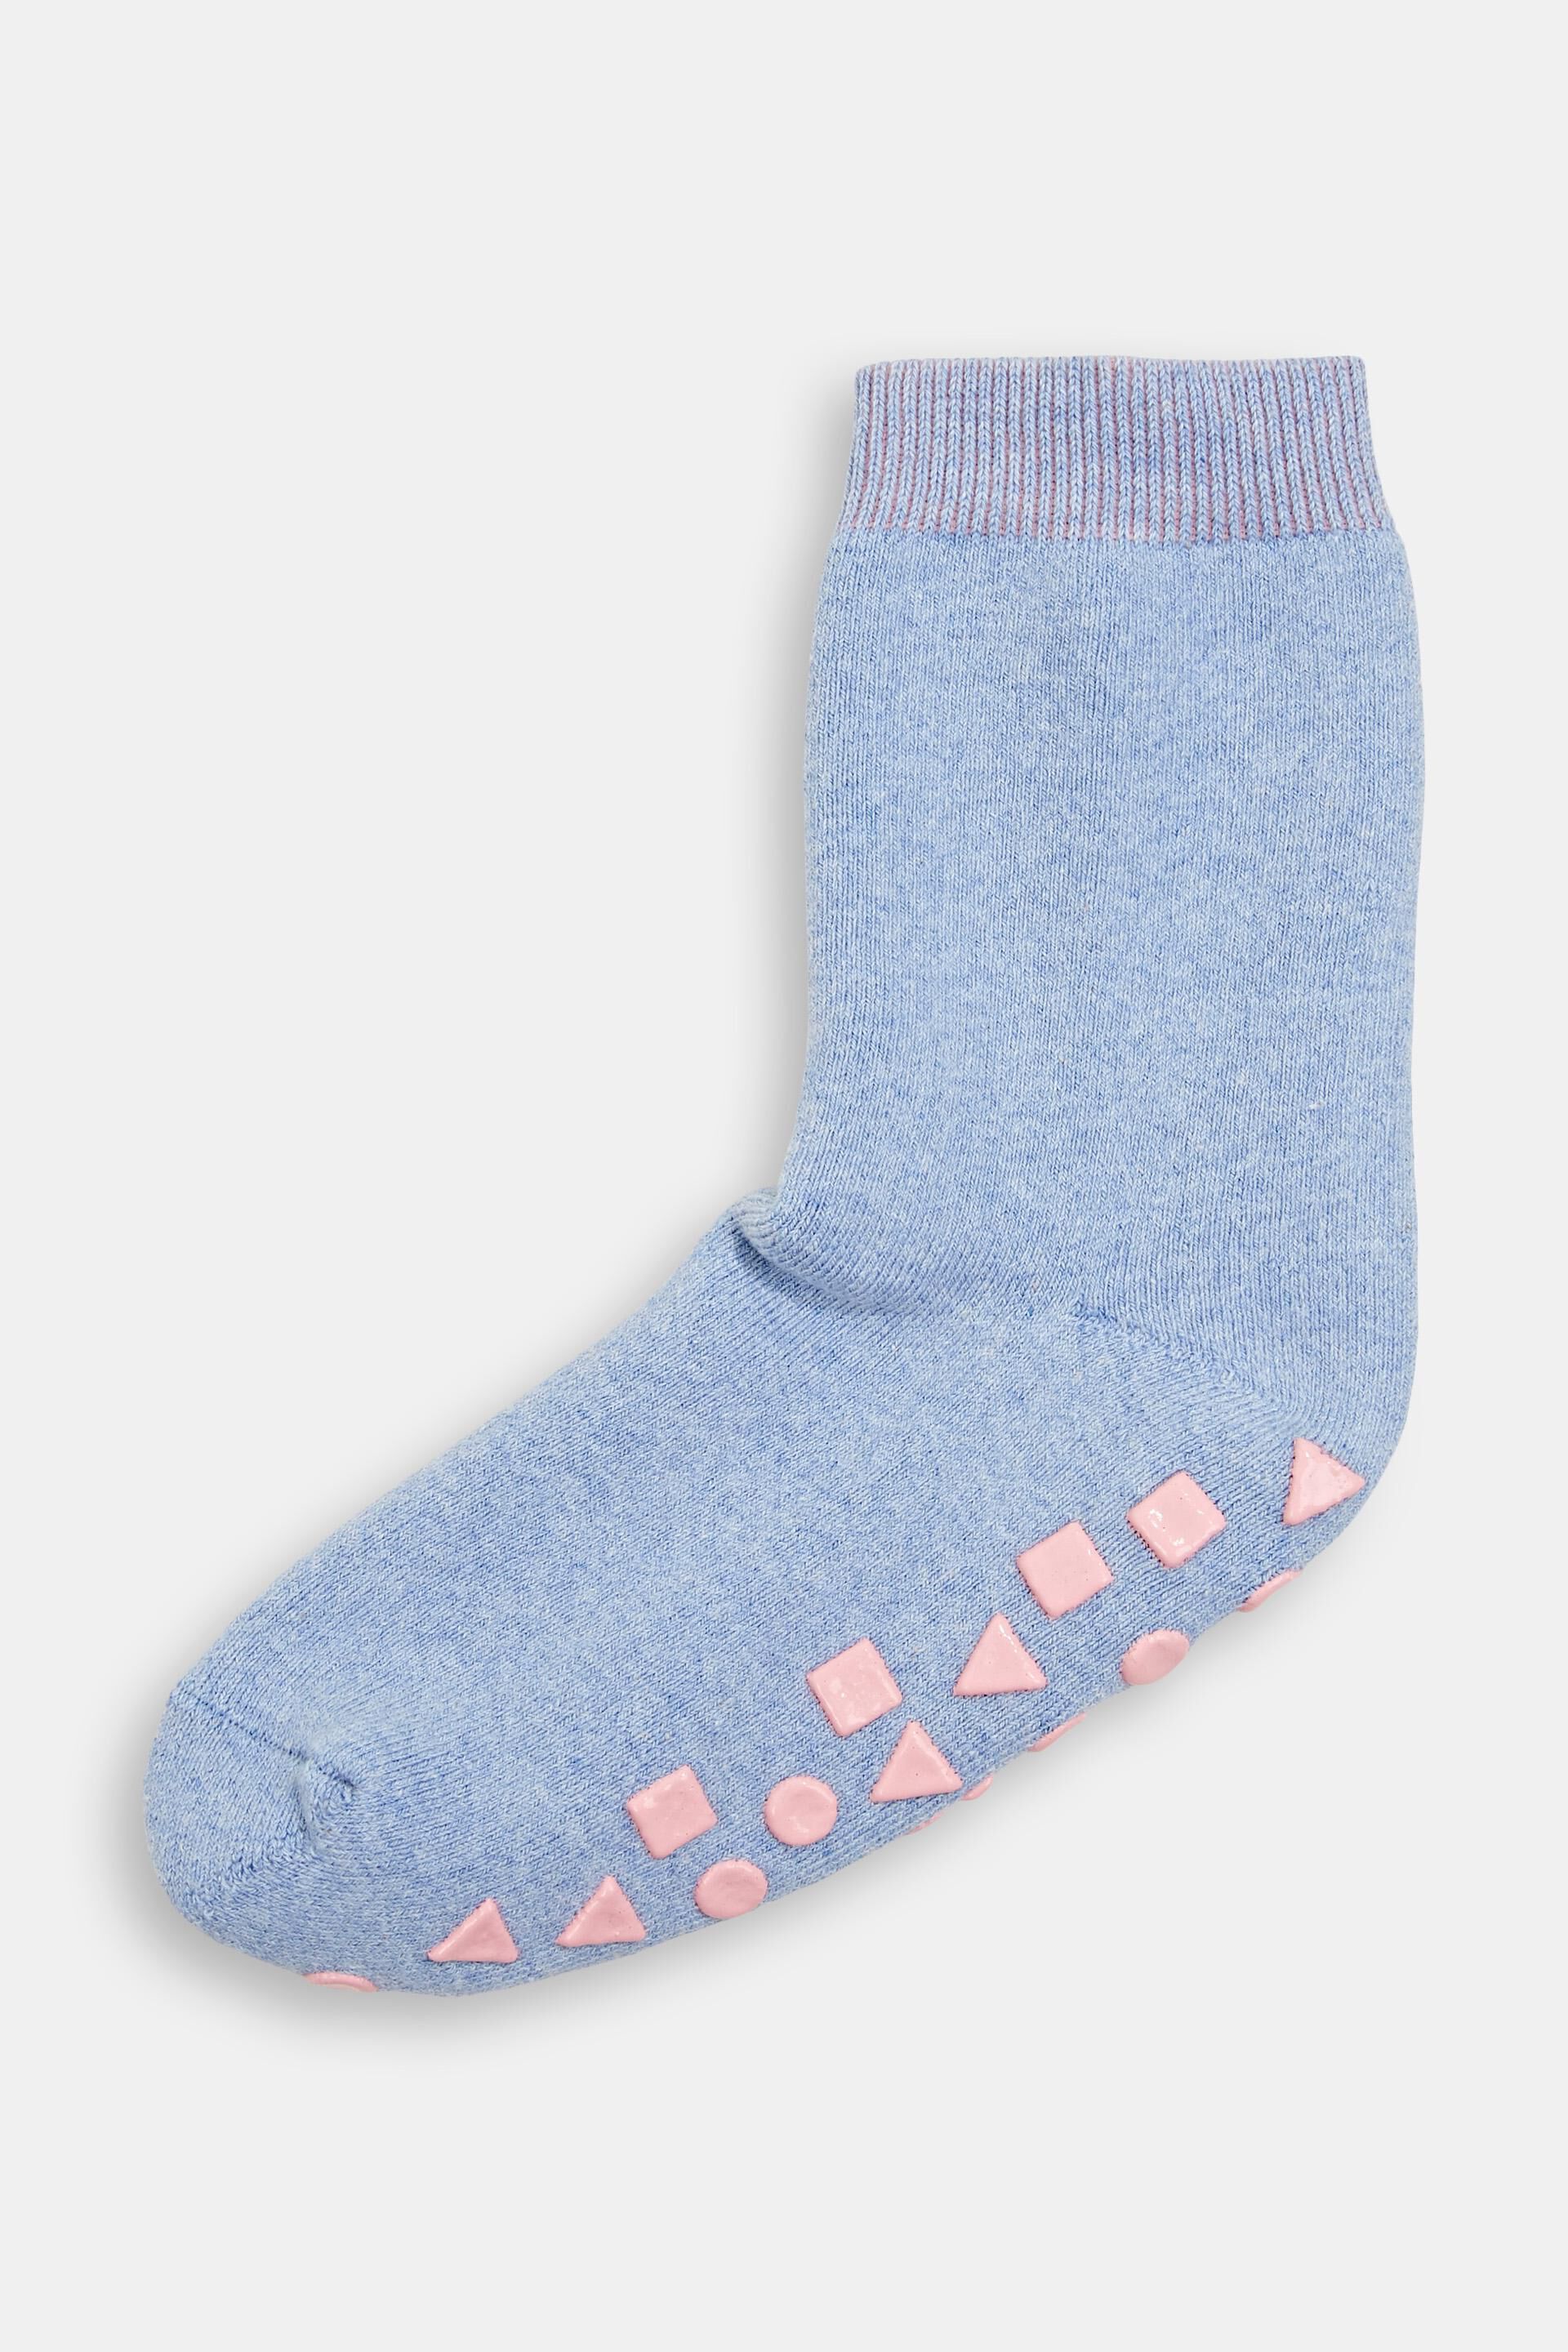 Edc By Esprit Non-slip socks made of blended organic cotton